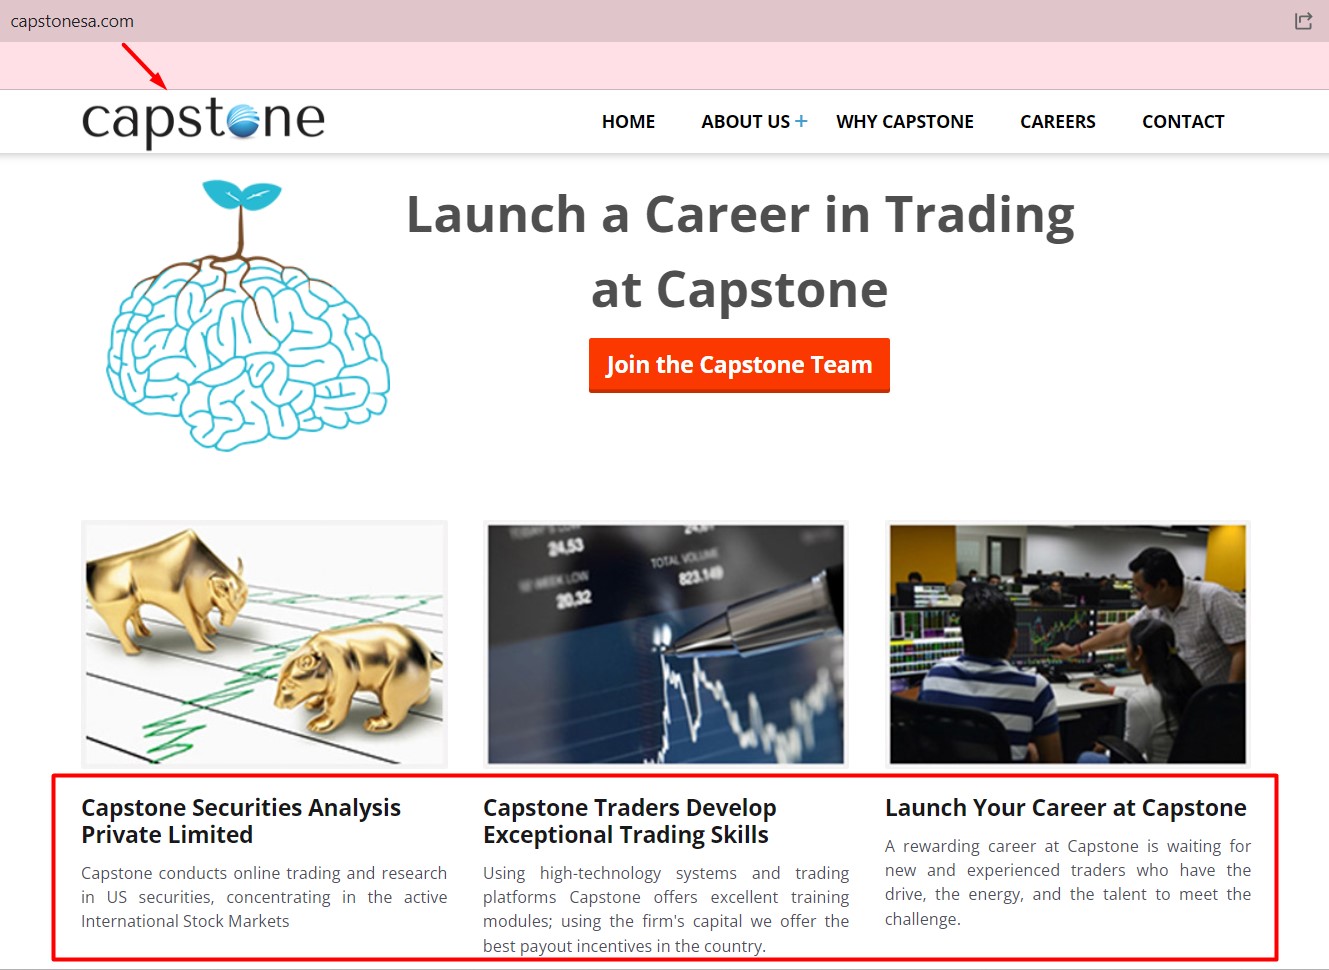  Capstone Securities Analysis Pvt Ltd